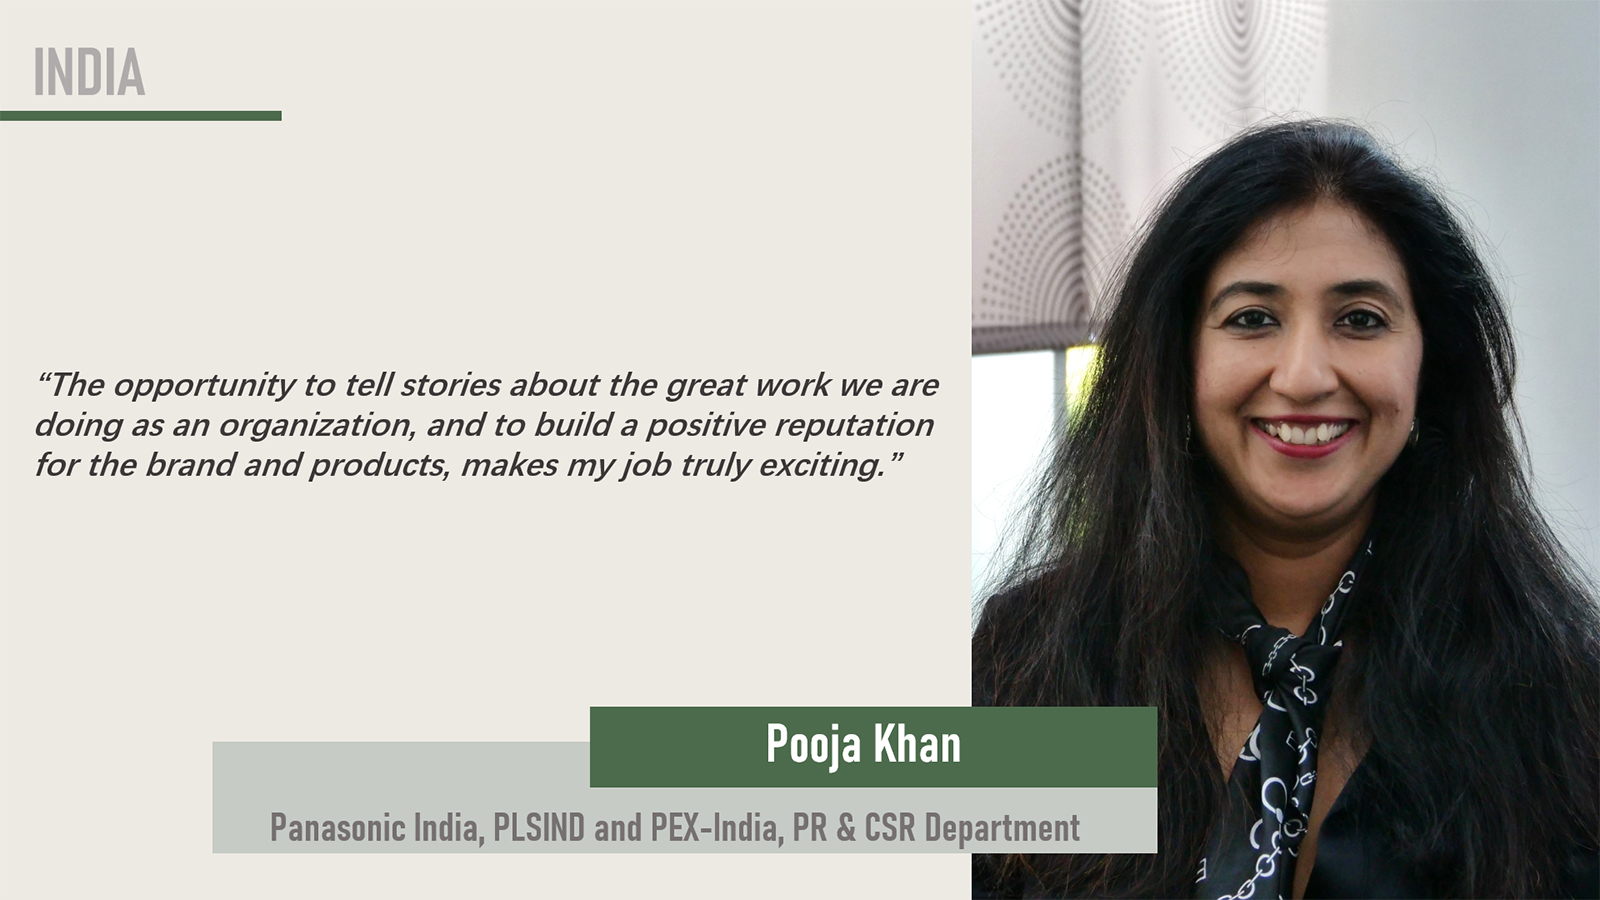 Photo: Pooja Khan, Panasonic India, PLSIND and PEX-India, PR & CSR Department